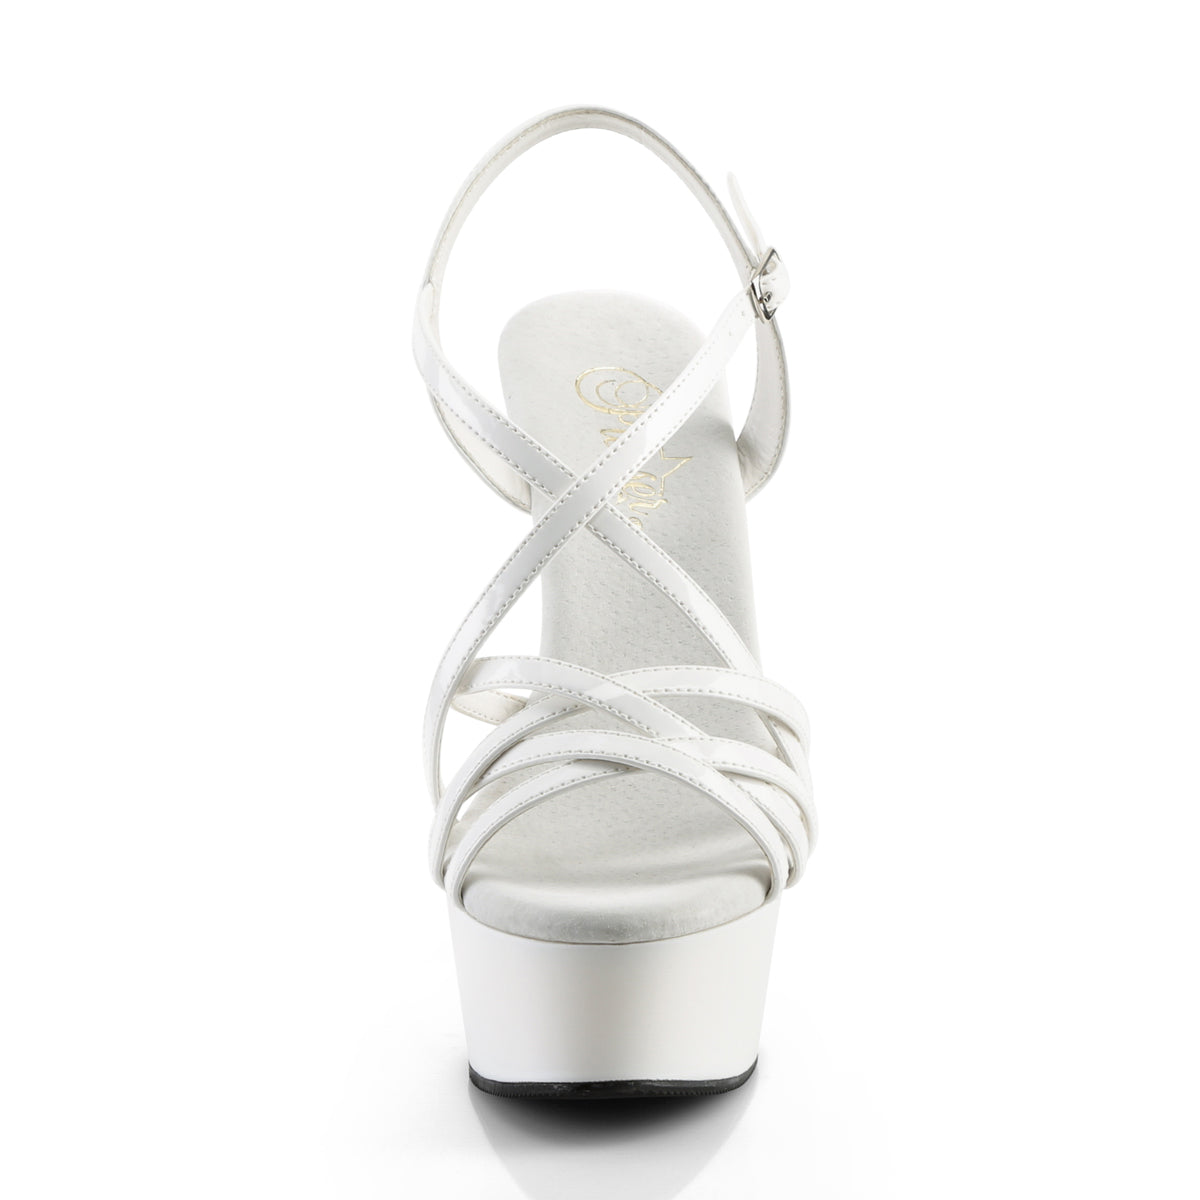 DELIGHT-613 6" Heel White Patent Pole Dancing Platforms-Pleaser- Sexy Shoes Alternative Footwear